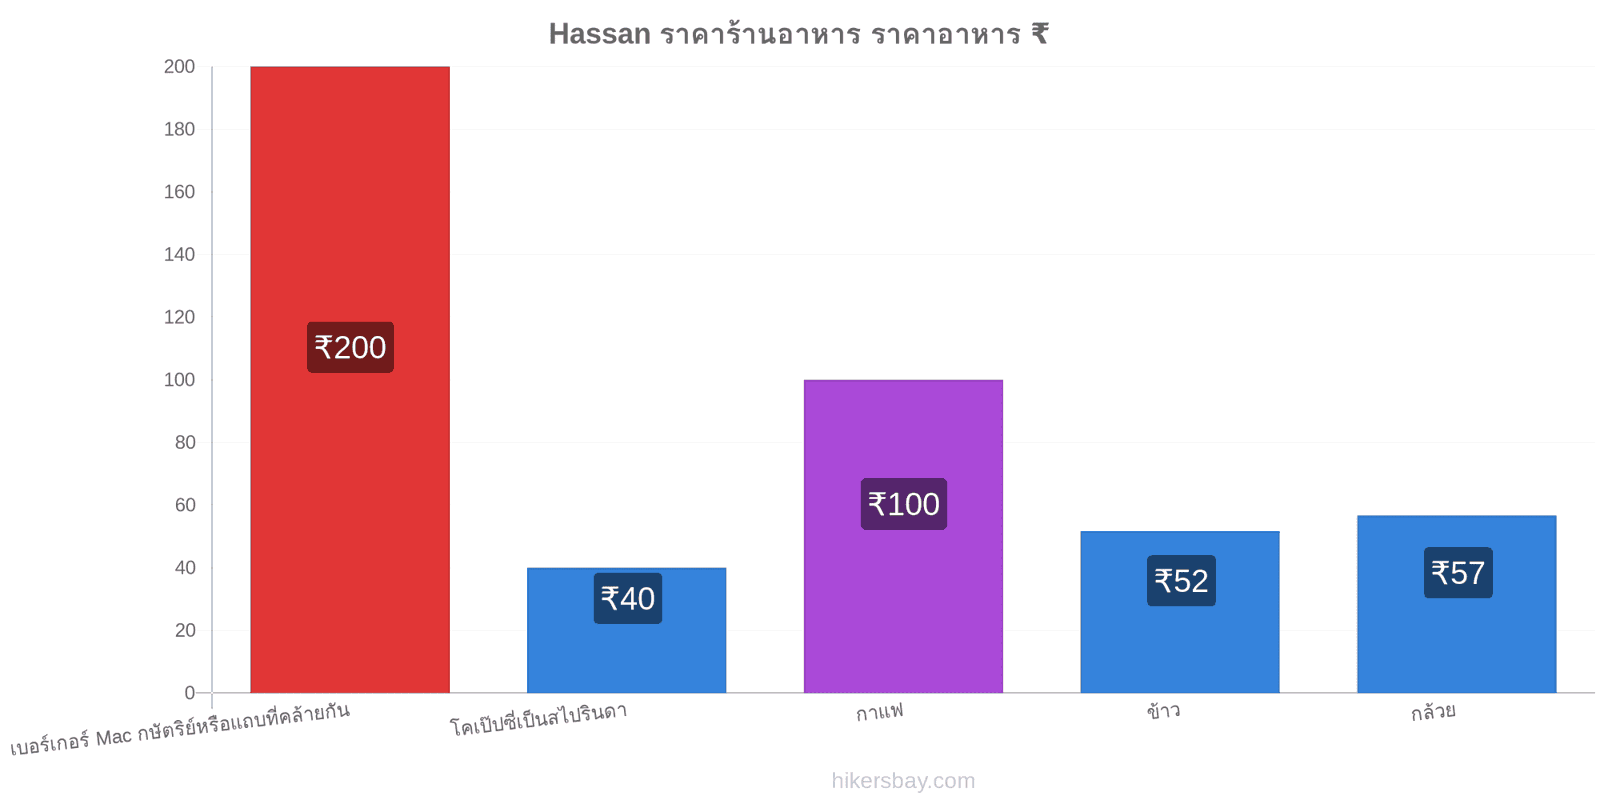 Hassan การเปลี่ยนแปลงราคา hikersbay.com